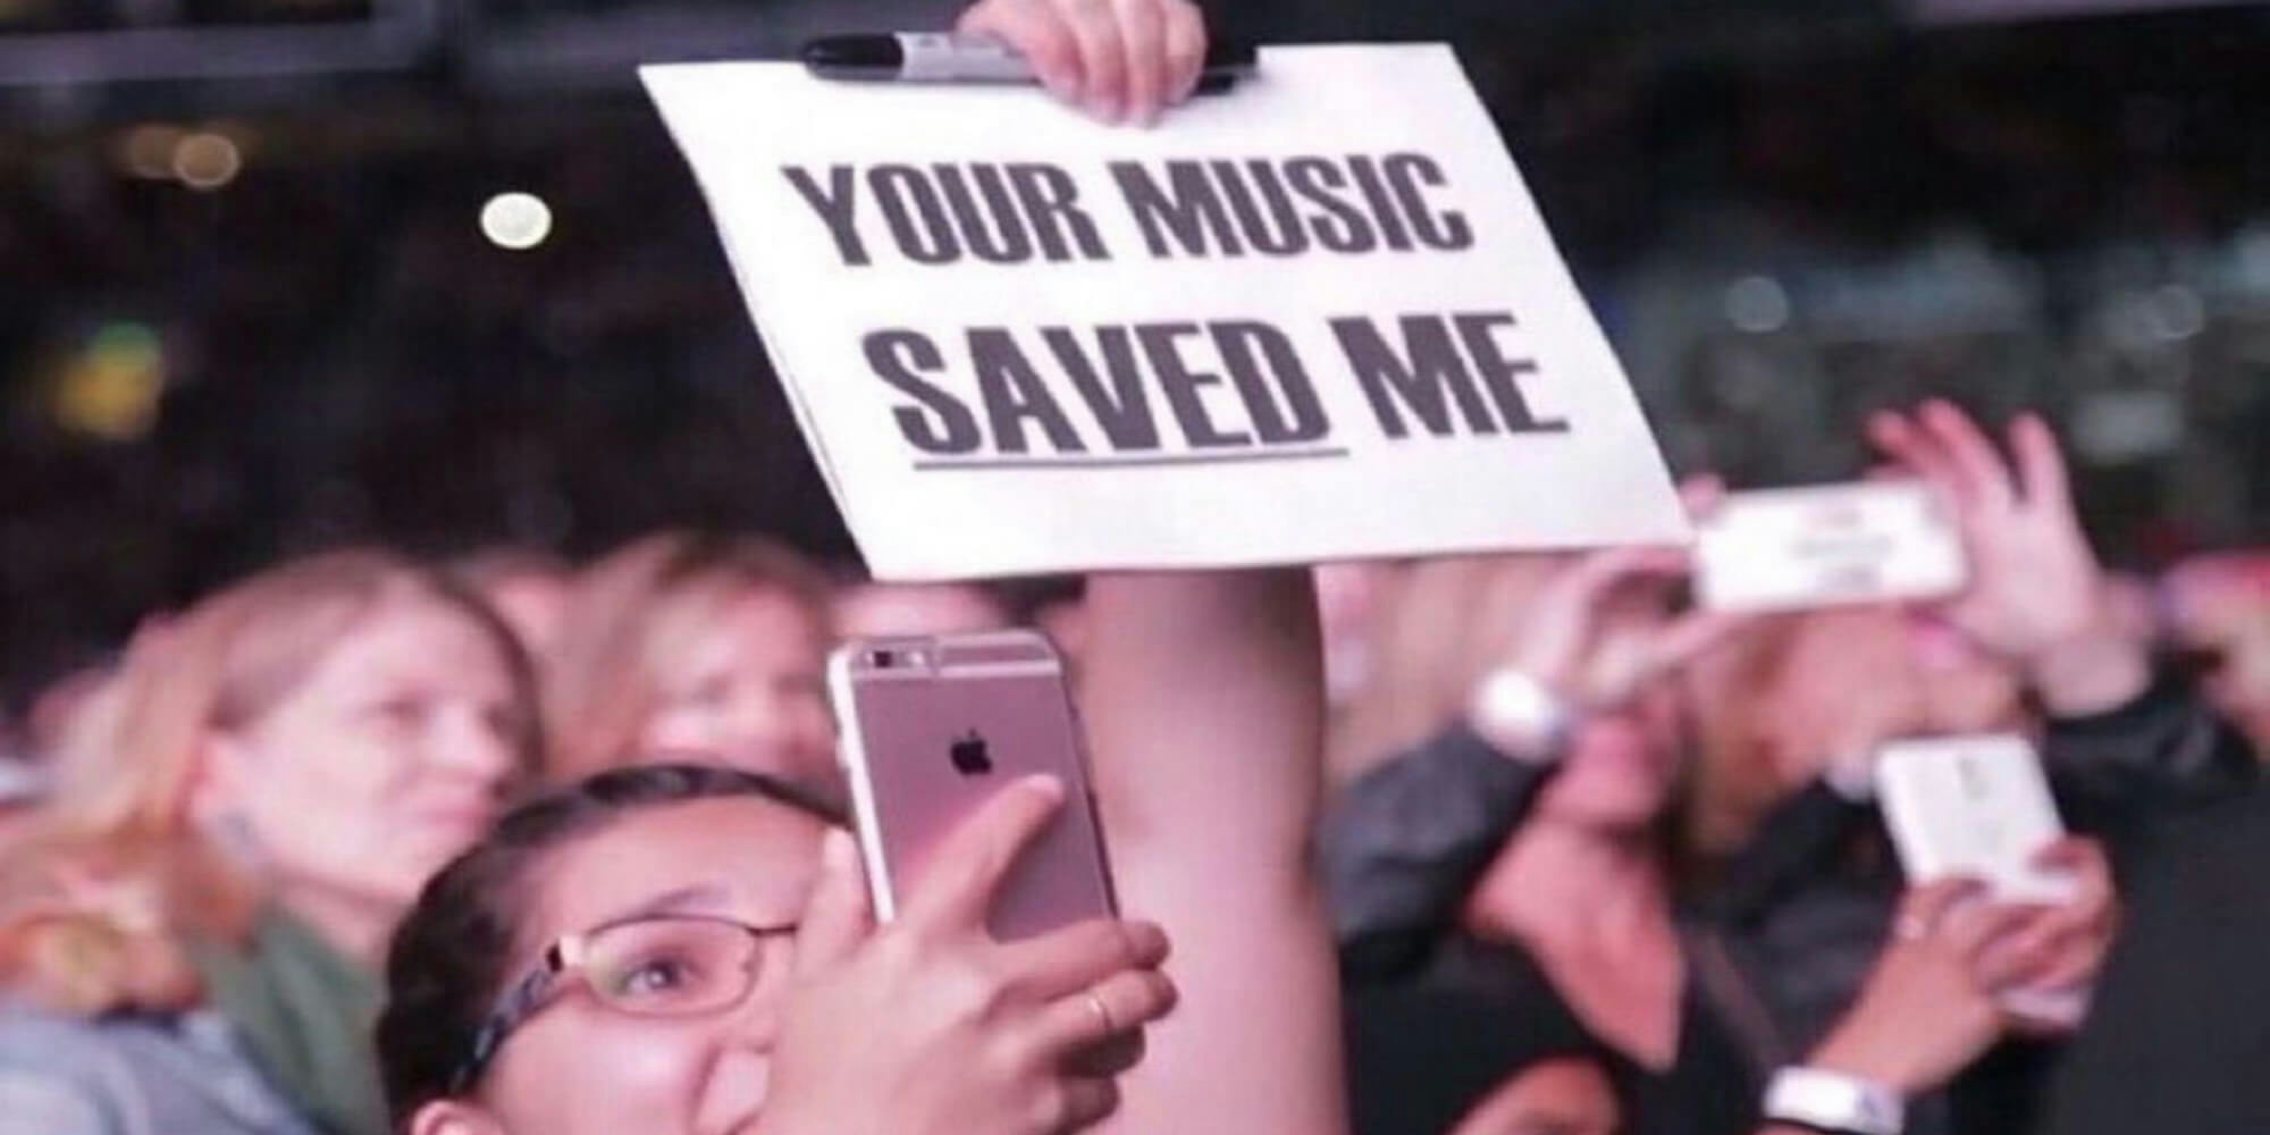 your music saved me meme